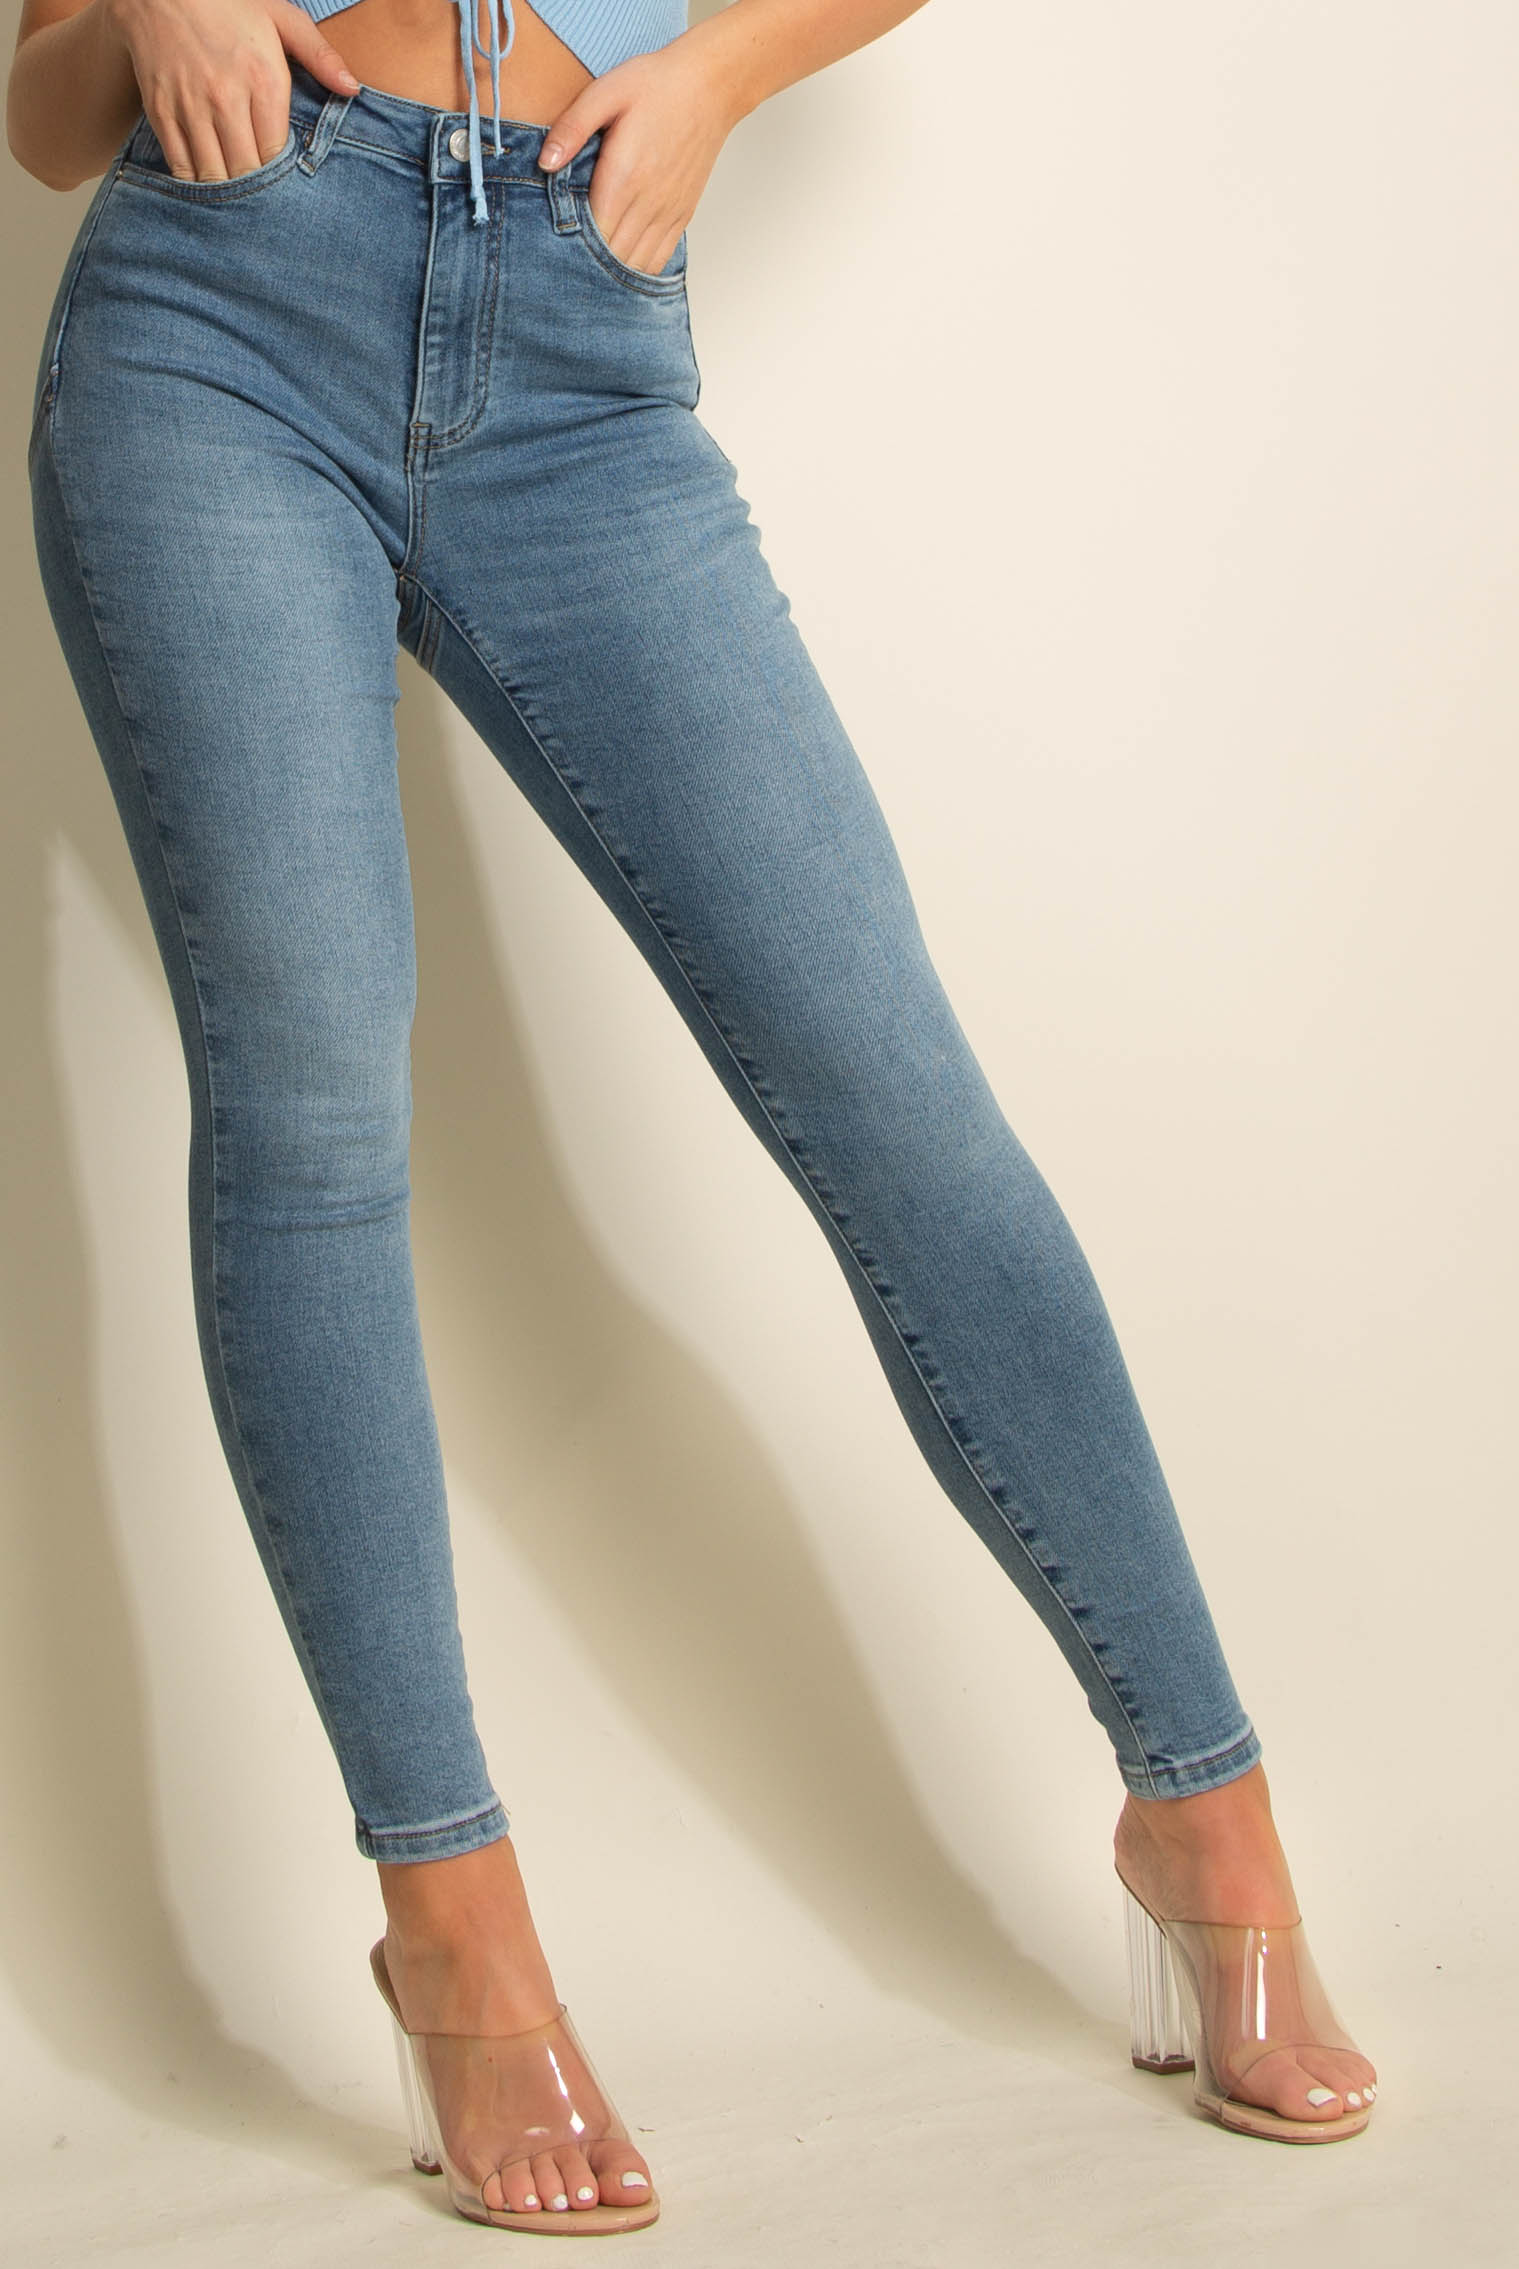 Wax Jean high rise push up skinny denim jeans brand... - Depop